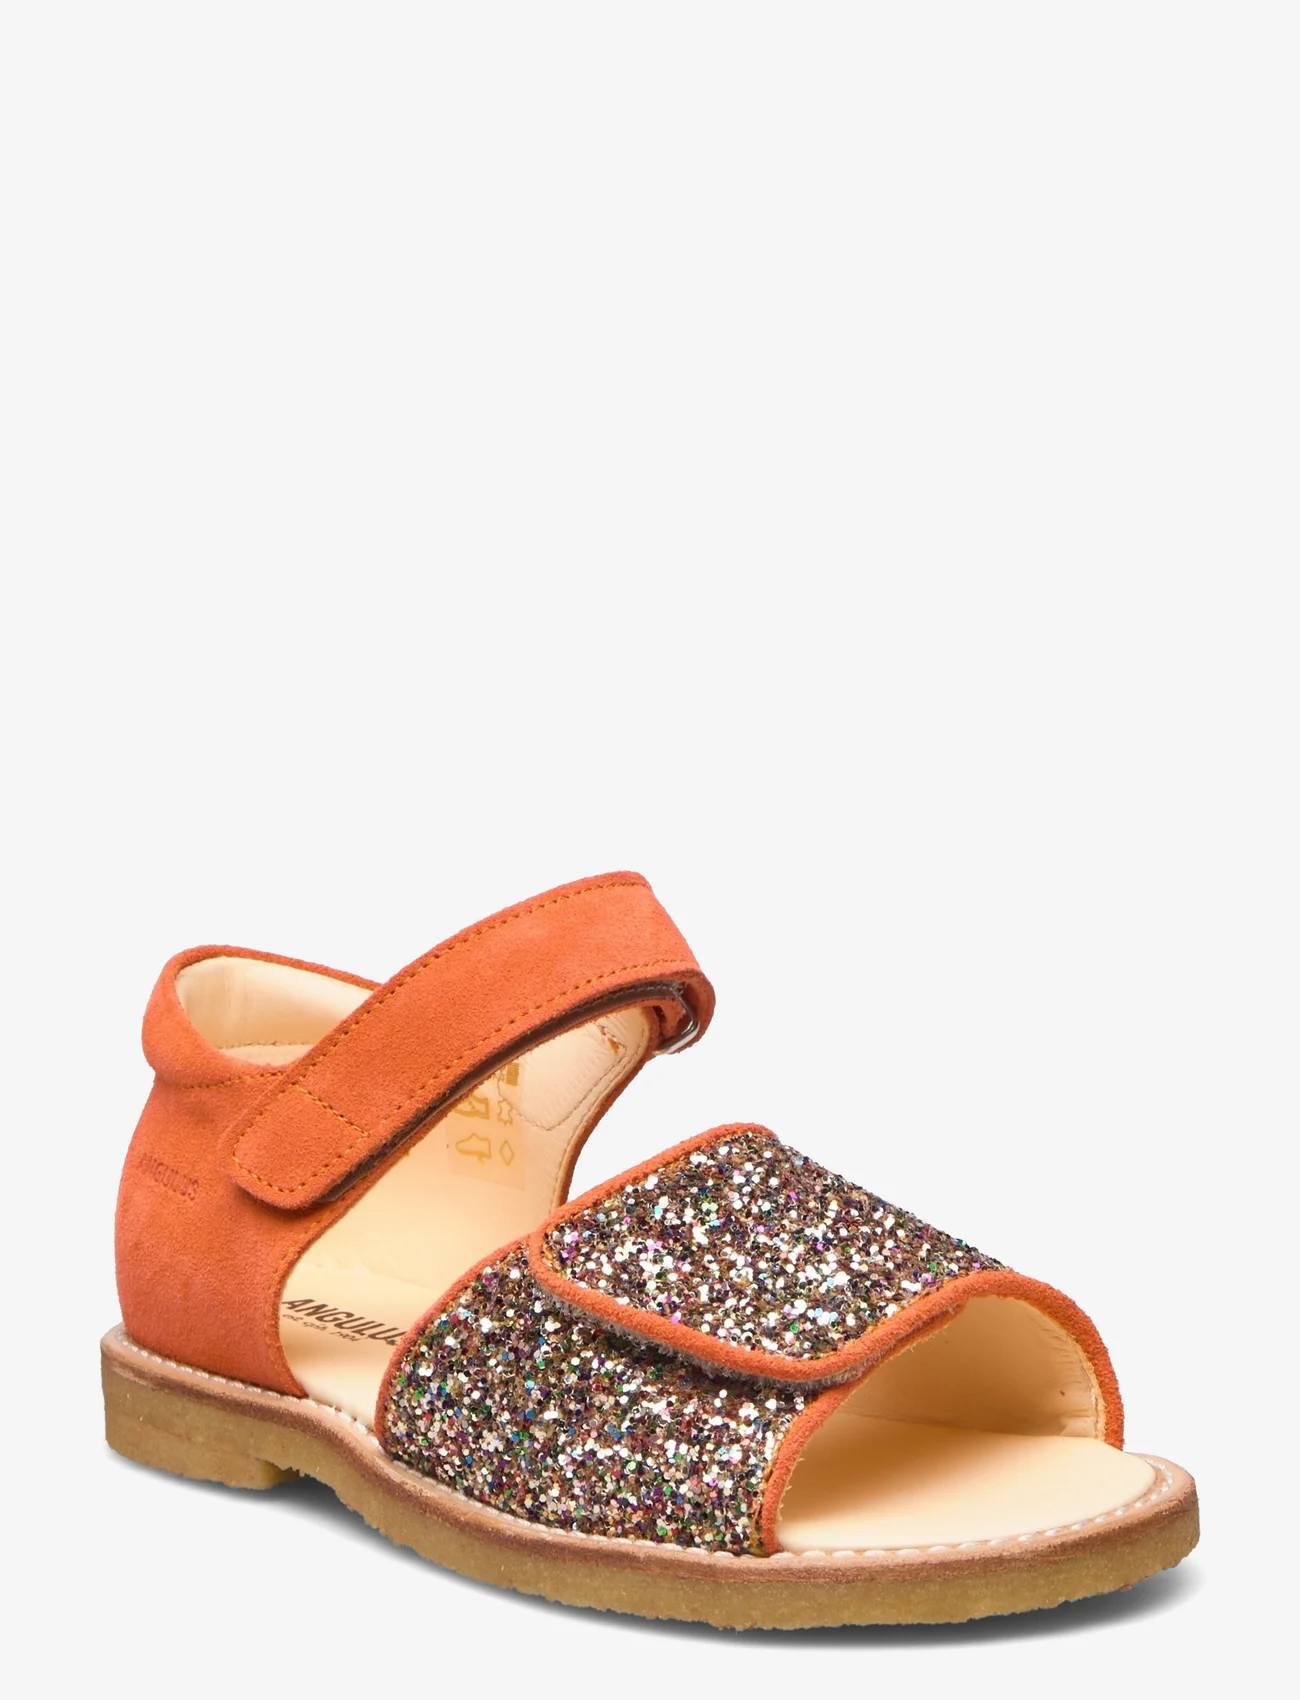 ANGULUS - Sandals - flat - open toe - clo - summer savings - 1141/2488 coral/multi glitter - 0